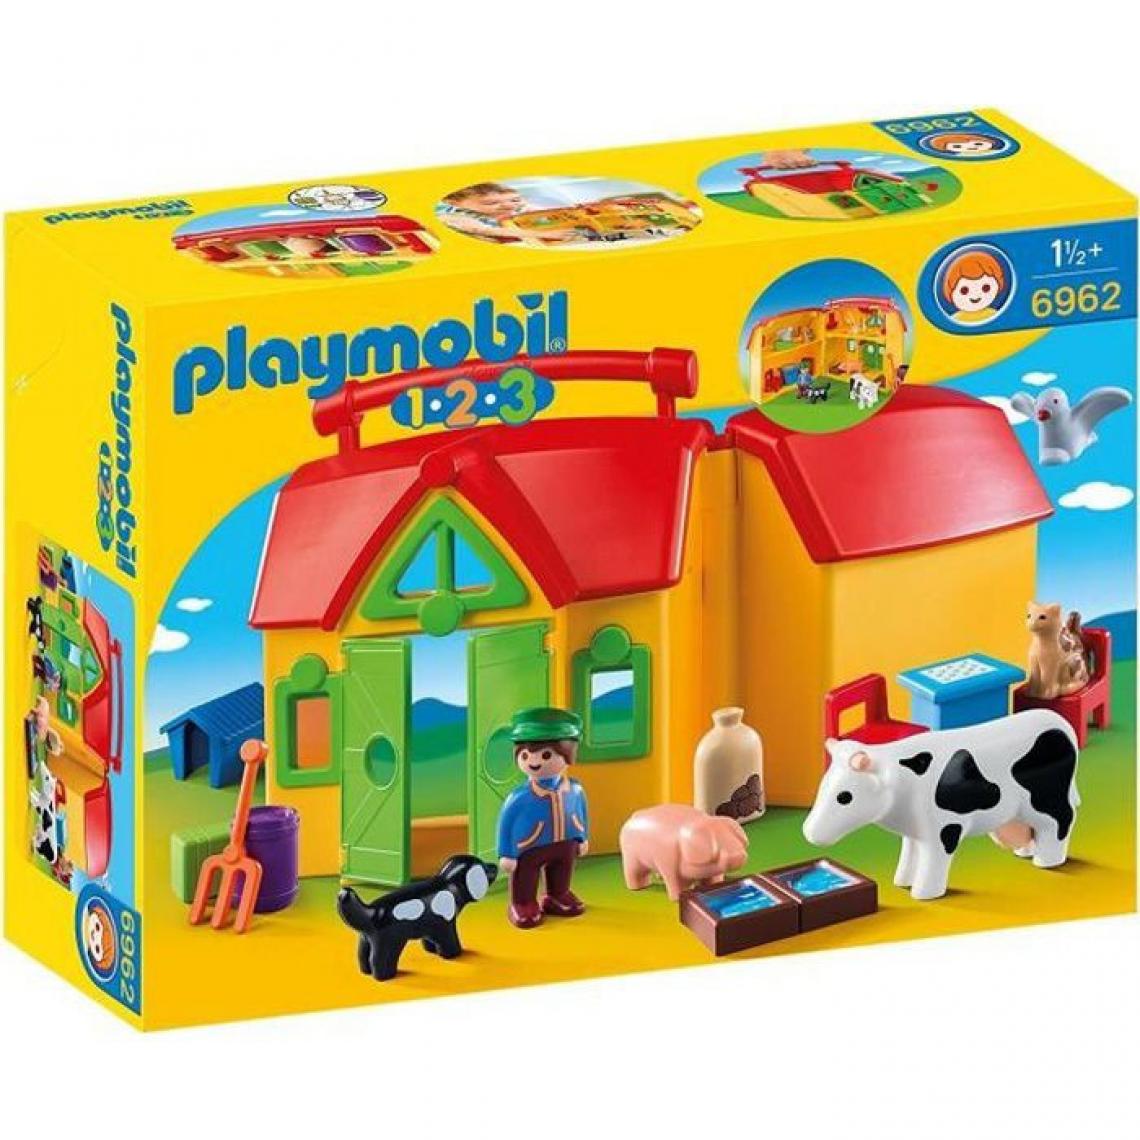 Playmobil - PLAYMOBIL 6962 - PLAYMOBIL 1.2.3 - Ferme Transportable Avec Animaux - Playmobil